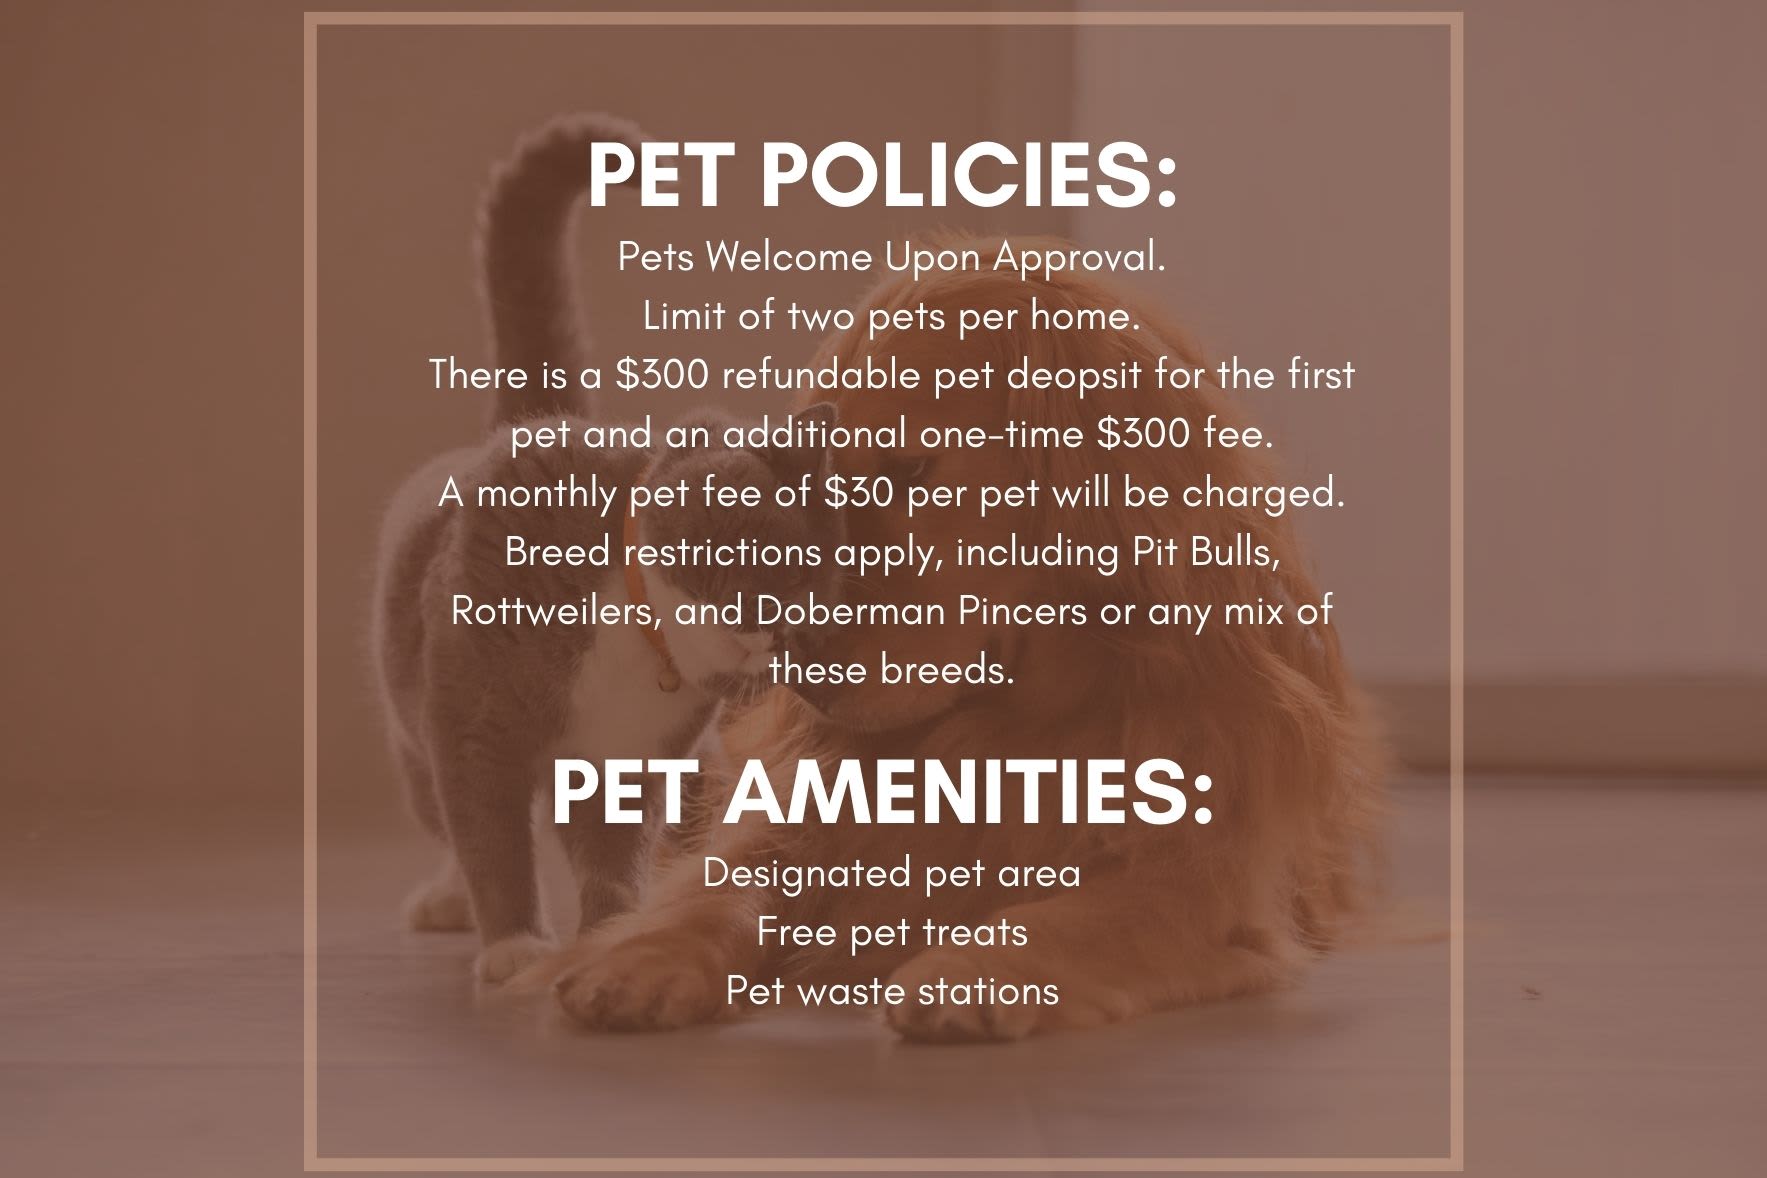 Photo of pet restrictions at Westmeadow Peaks Apartments in Colorado Springs, Colorado